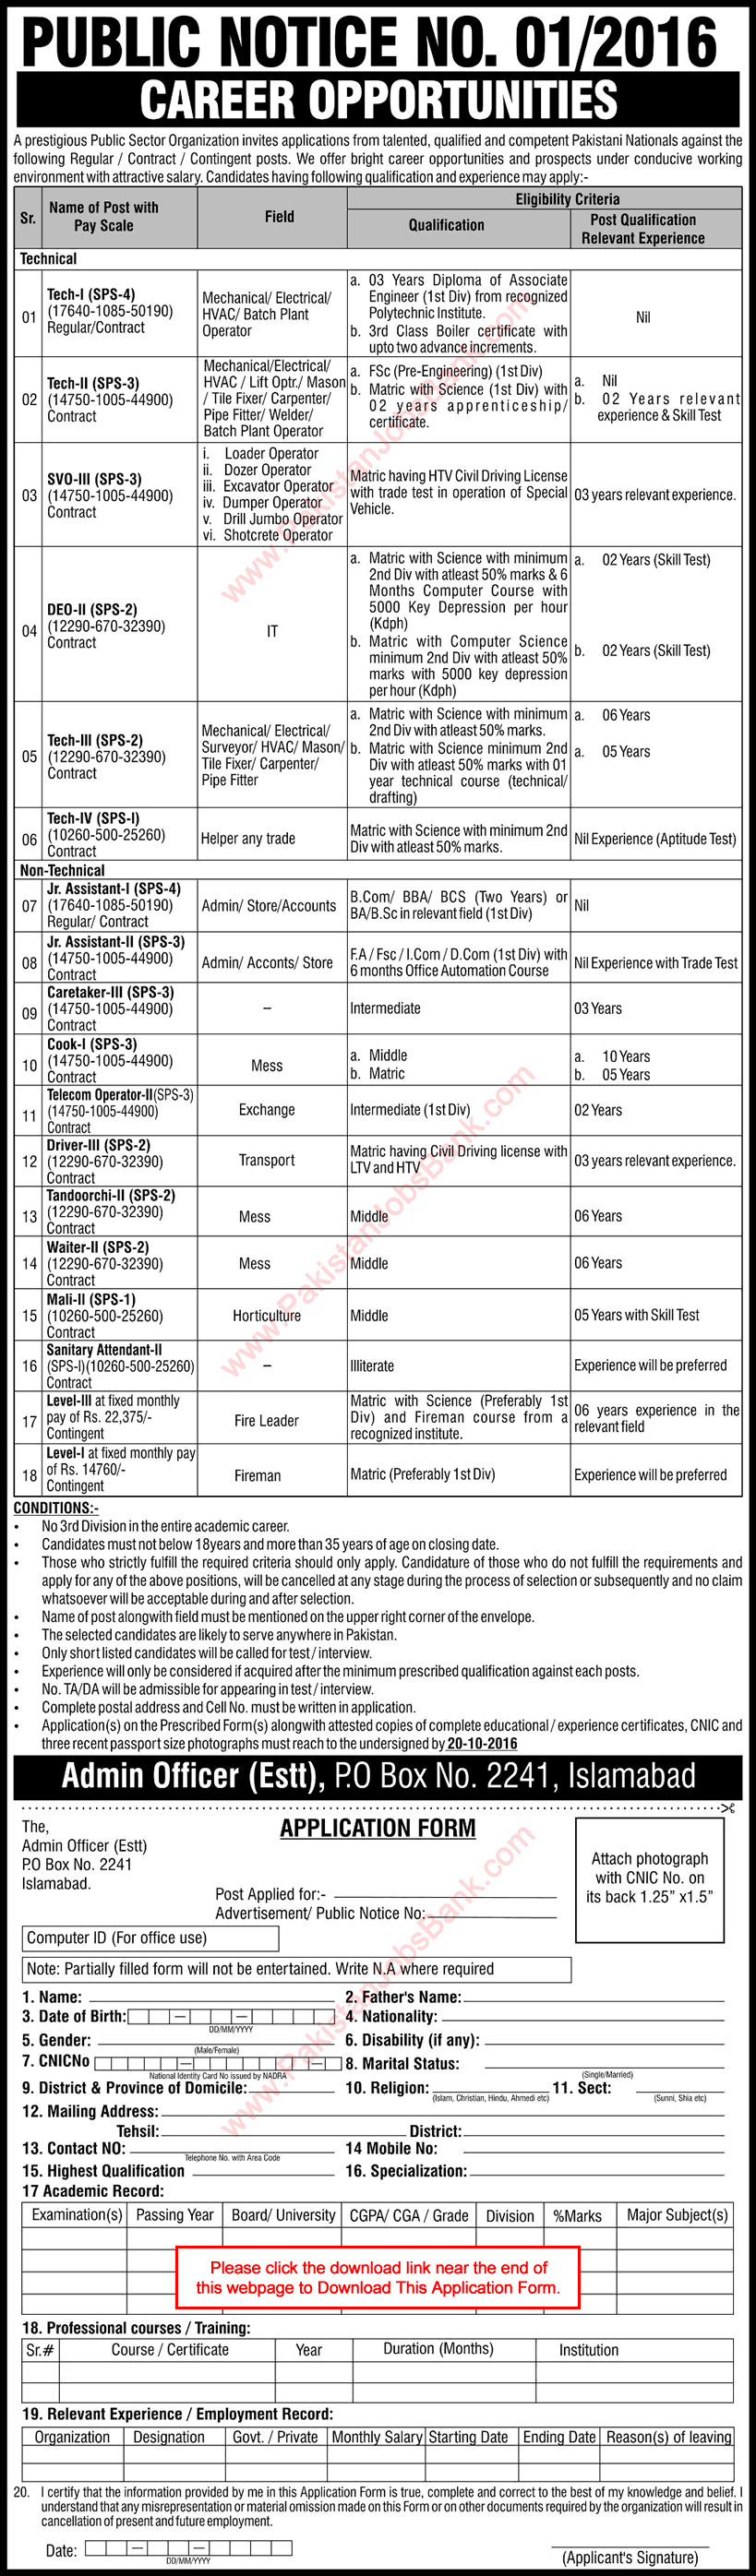 PO Box 2241 Islamabad Jobs 2016 September PAEC Application Form Public Sector Organization Latest